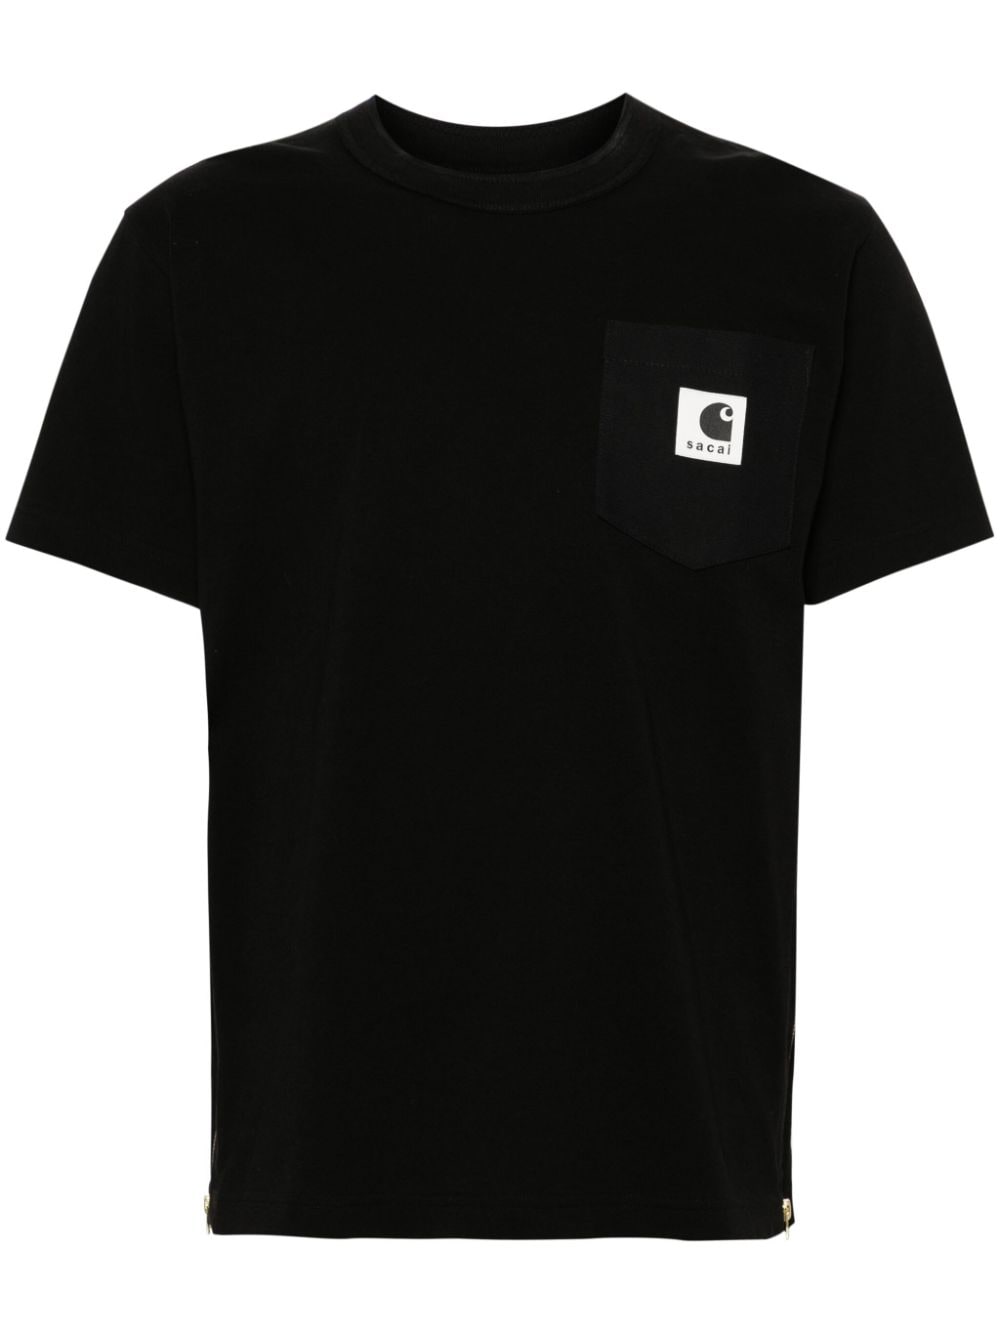 Sacai x Carhartt T-shirt met colourblocking Zwart